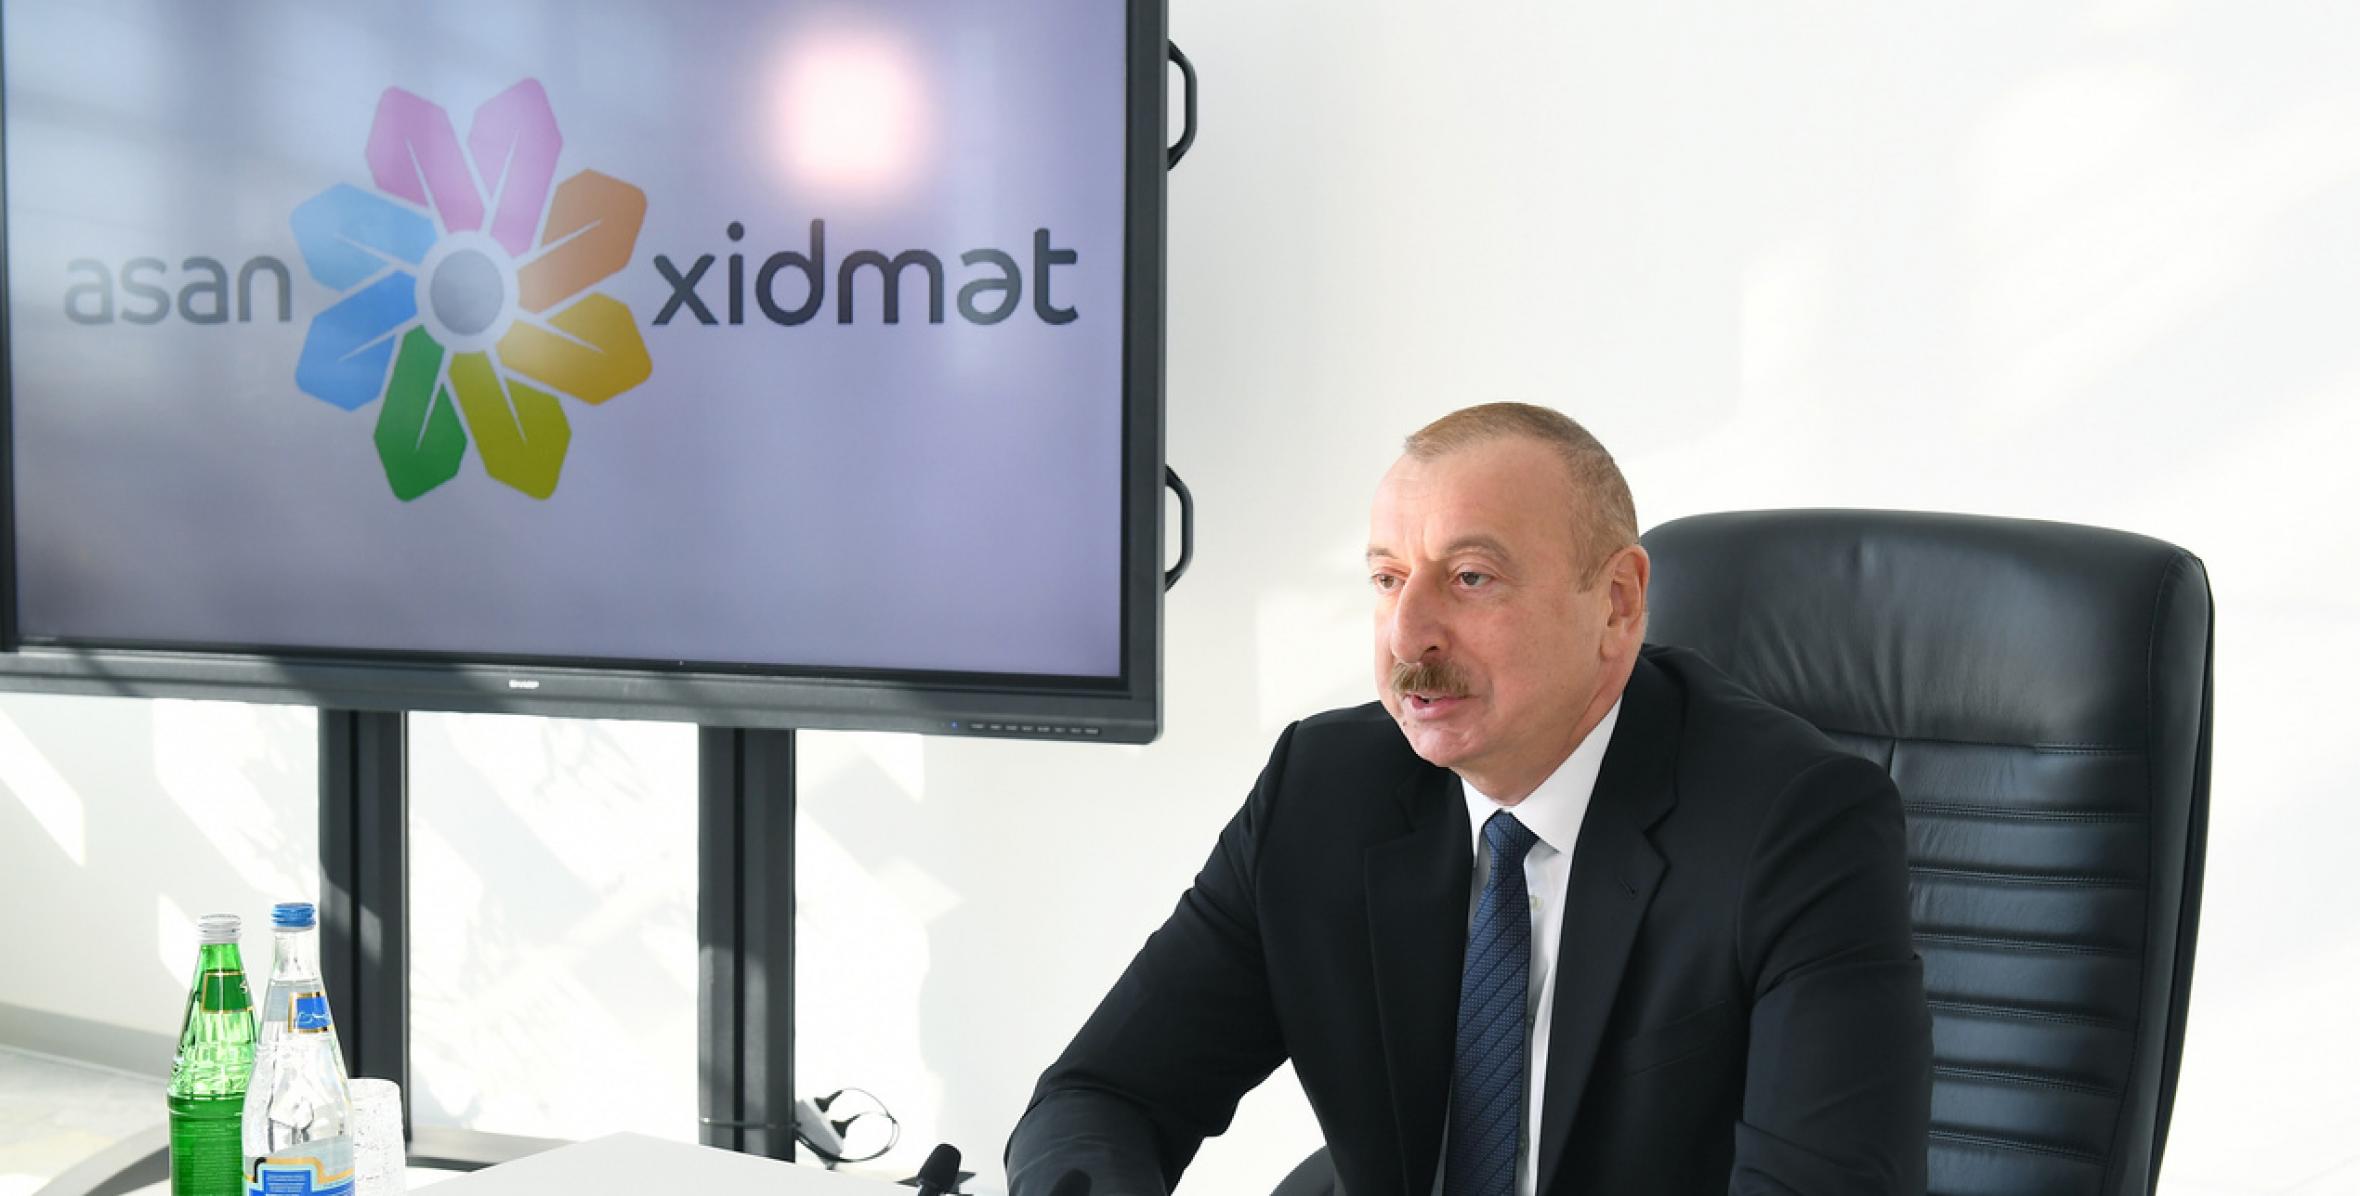 Speech by Ilham Aliyev at the opening of “ASAN xidmet” center in Kurdamir